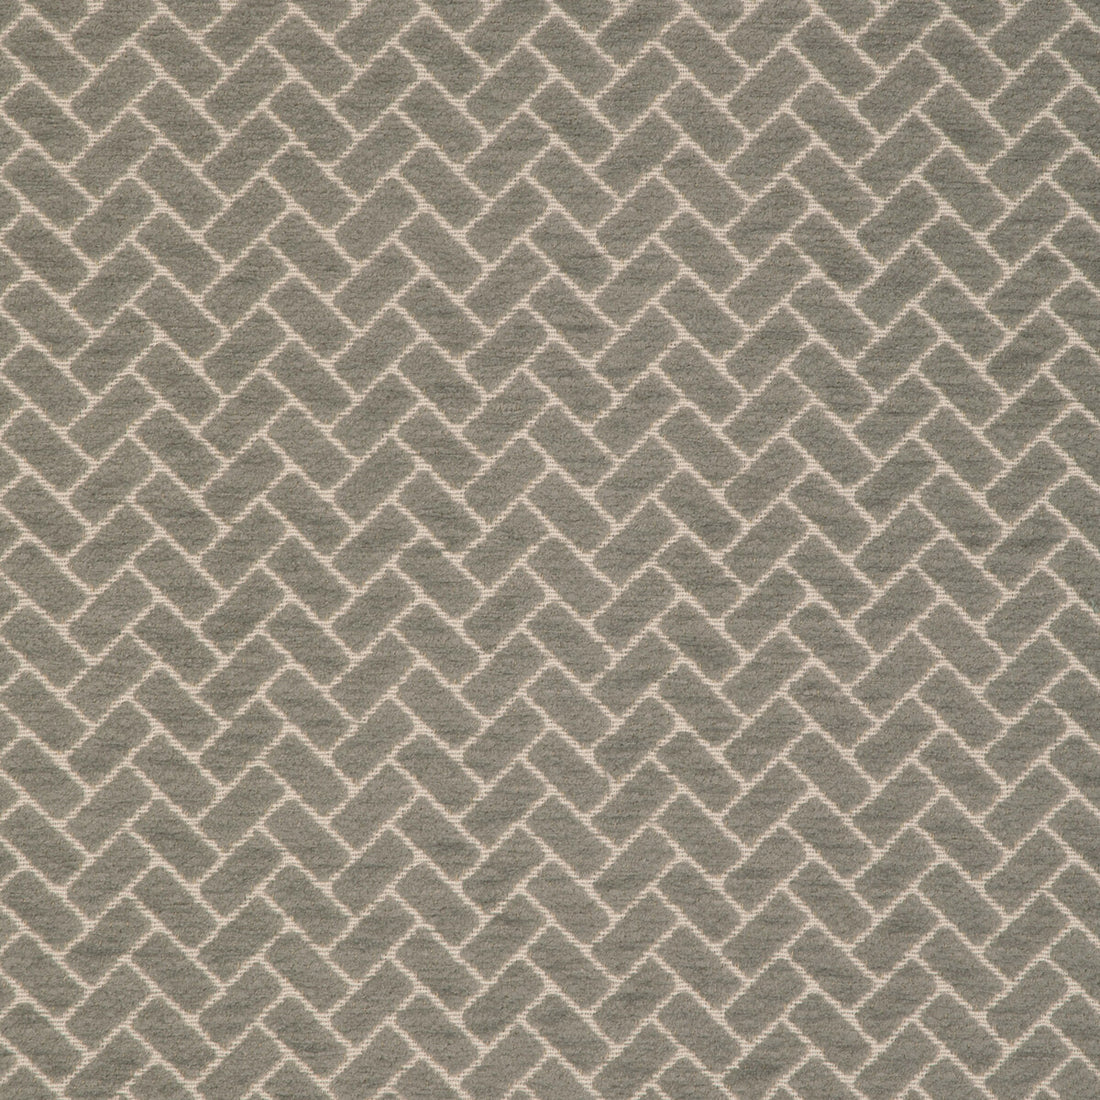 Kravet Smart fabric in 37003-11 color - pattern 37003.11.0 - by Kravet Smart in the Pavilion collection